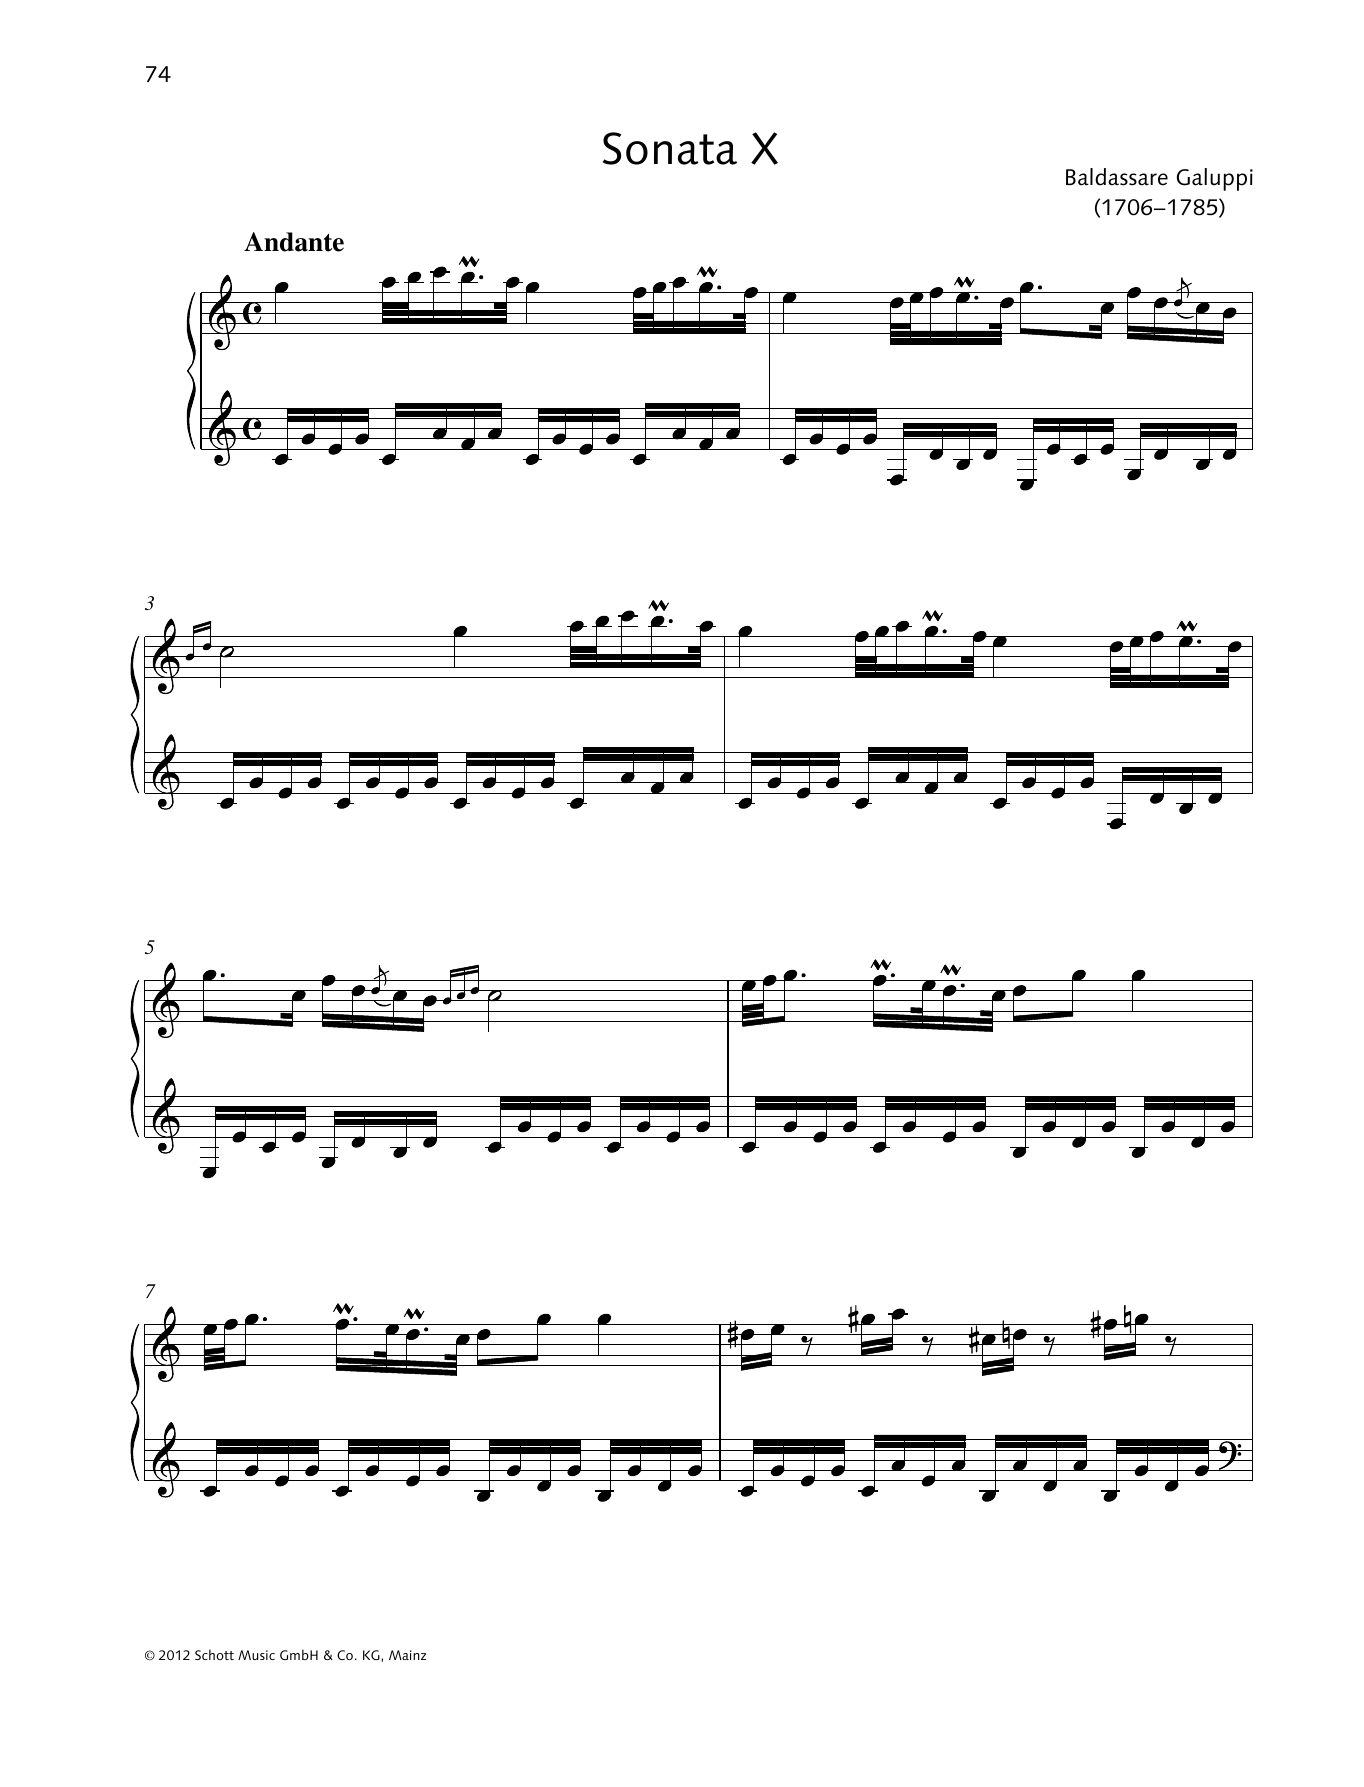 Baldassare Galuppi Sonata X C major sheet music notes and chords arranged for Piano Solo